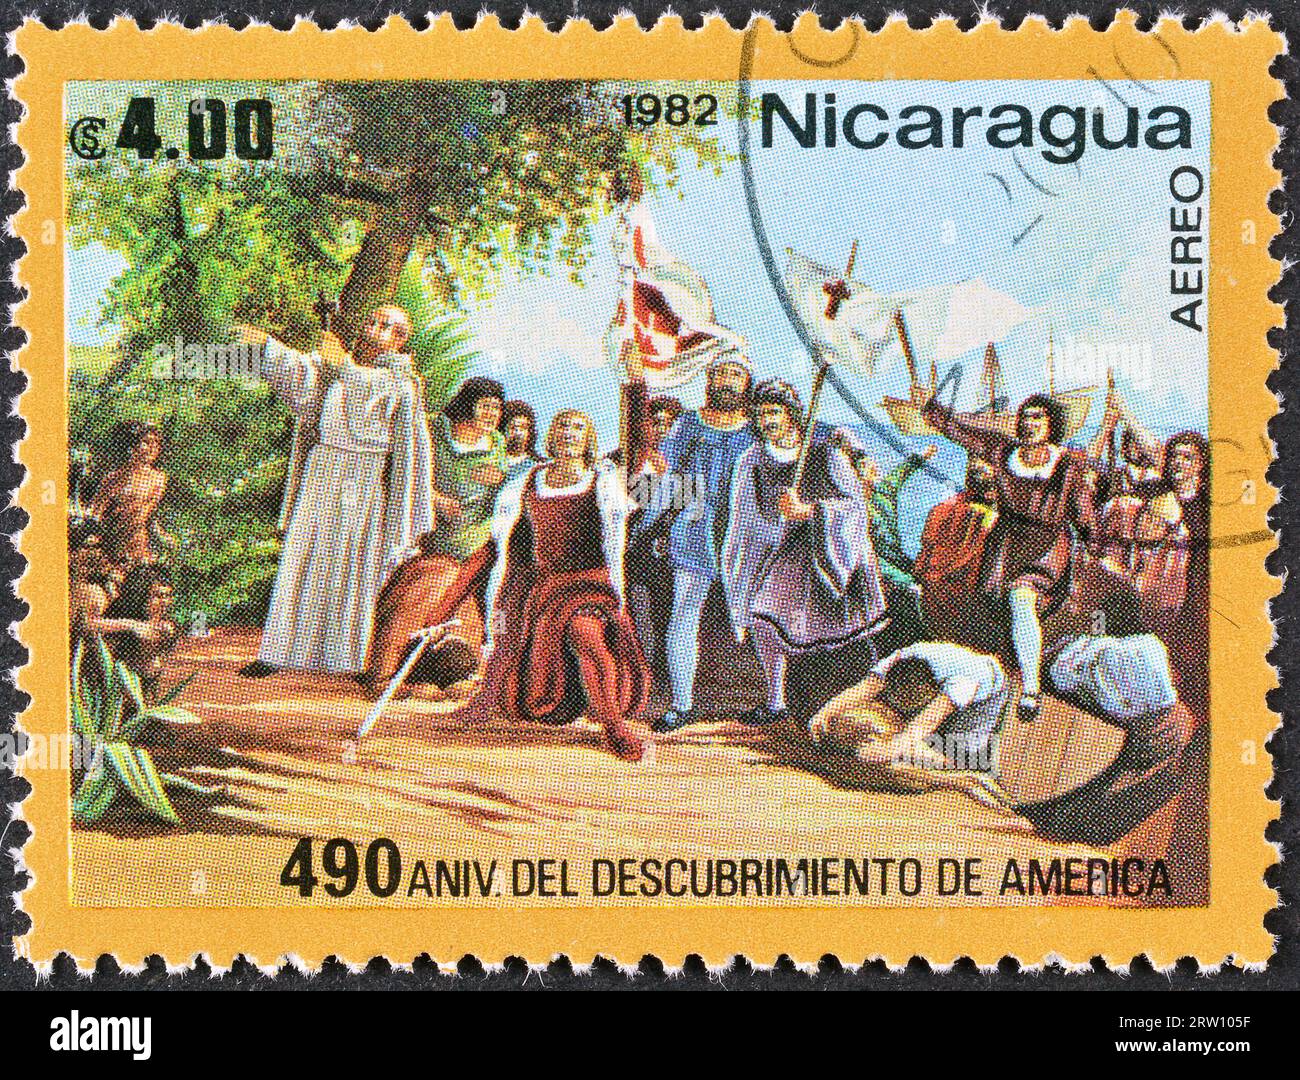 Von Nicaragua gedruckte Briefmarke, die Landing of Columbus, Discovery of America, 490 Anniversary, ca. 1982 zeigt. Stockfoto